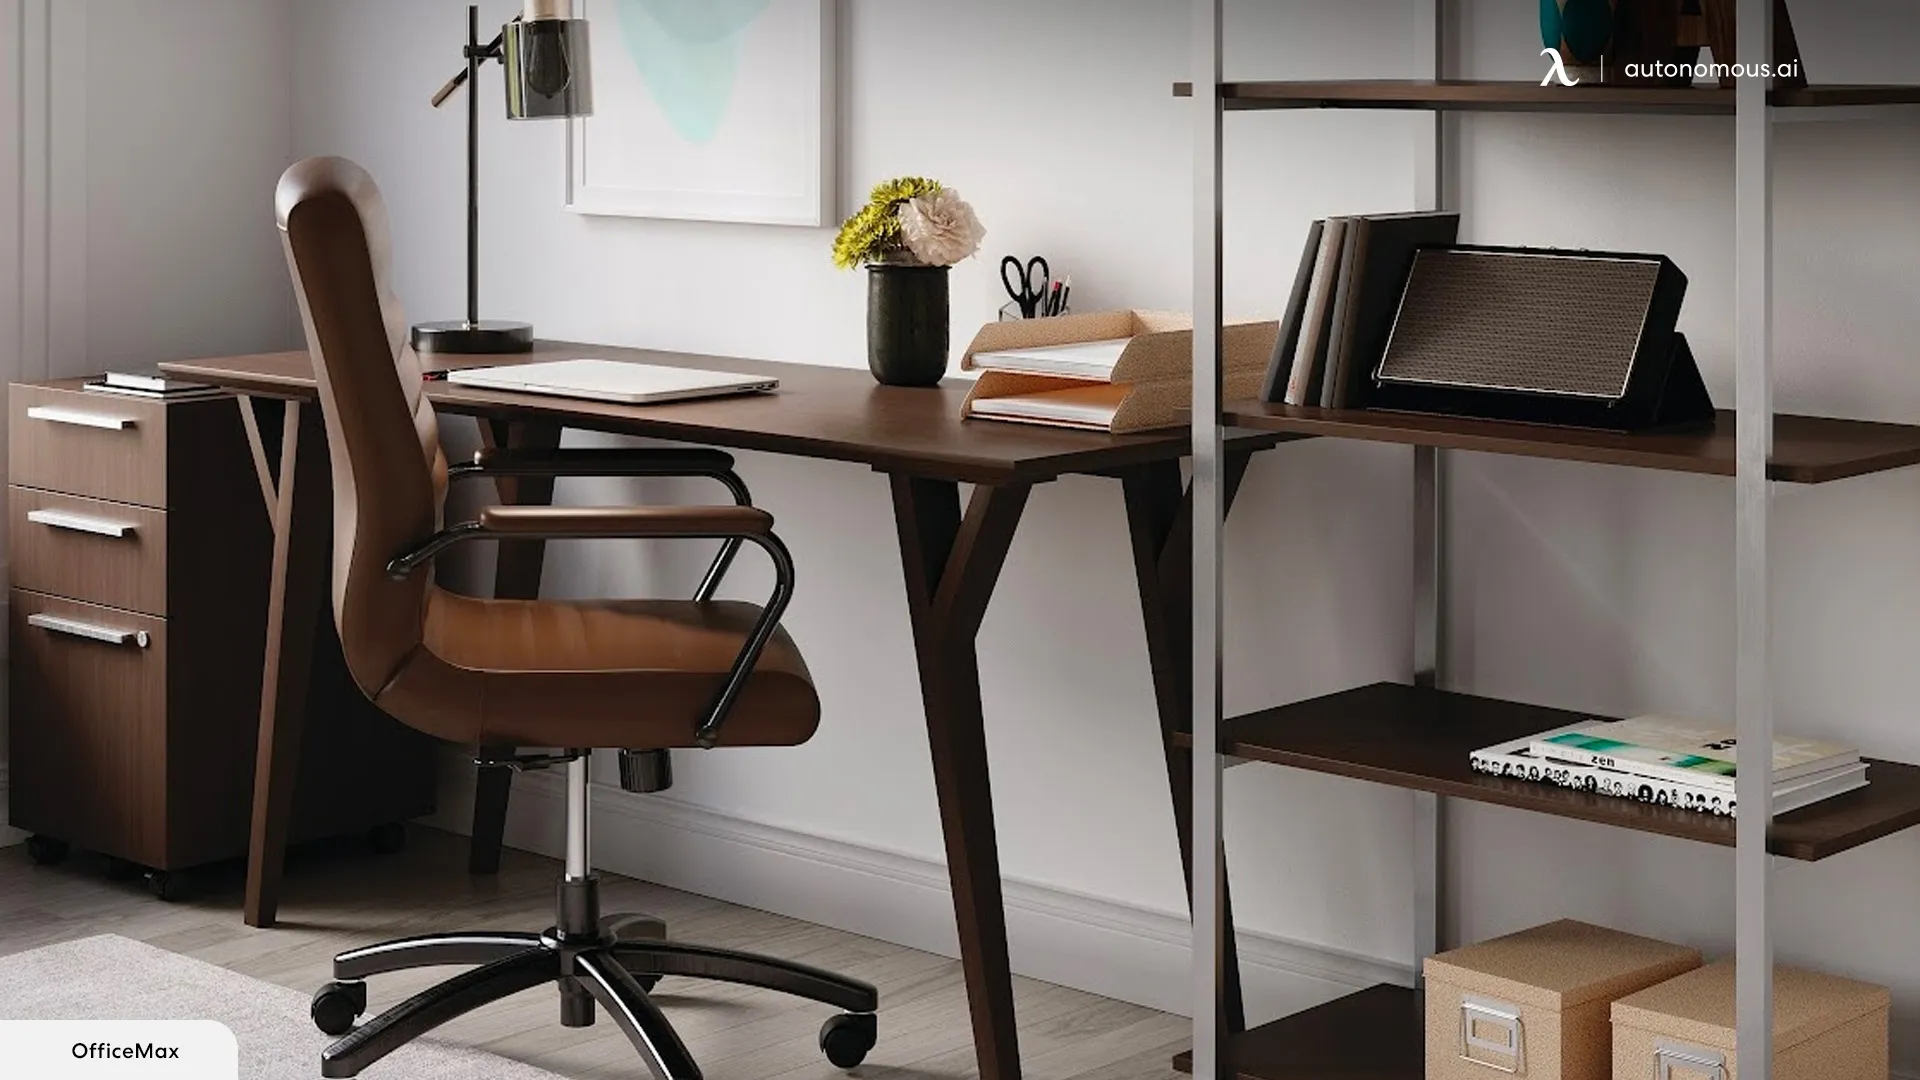 OfficeMax - Offline Office Furniture Store